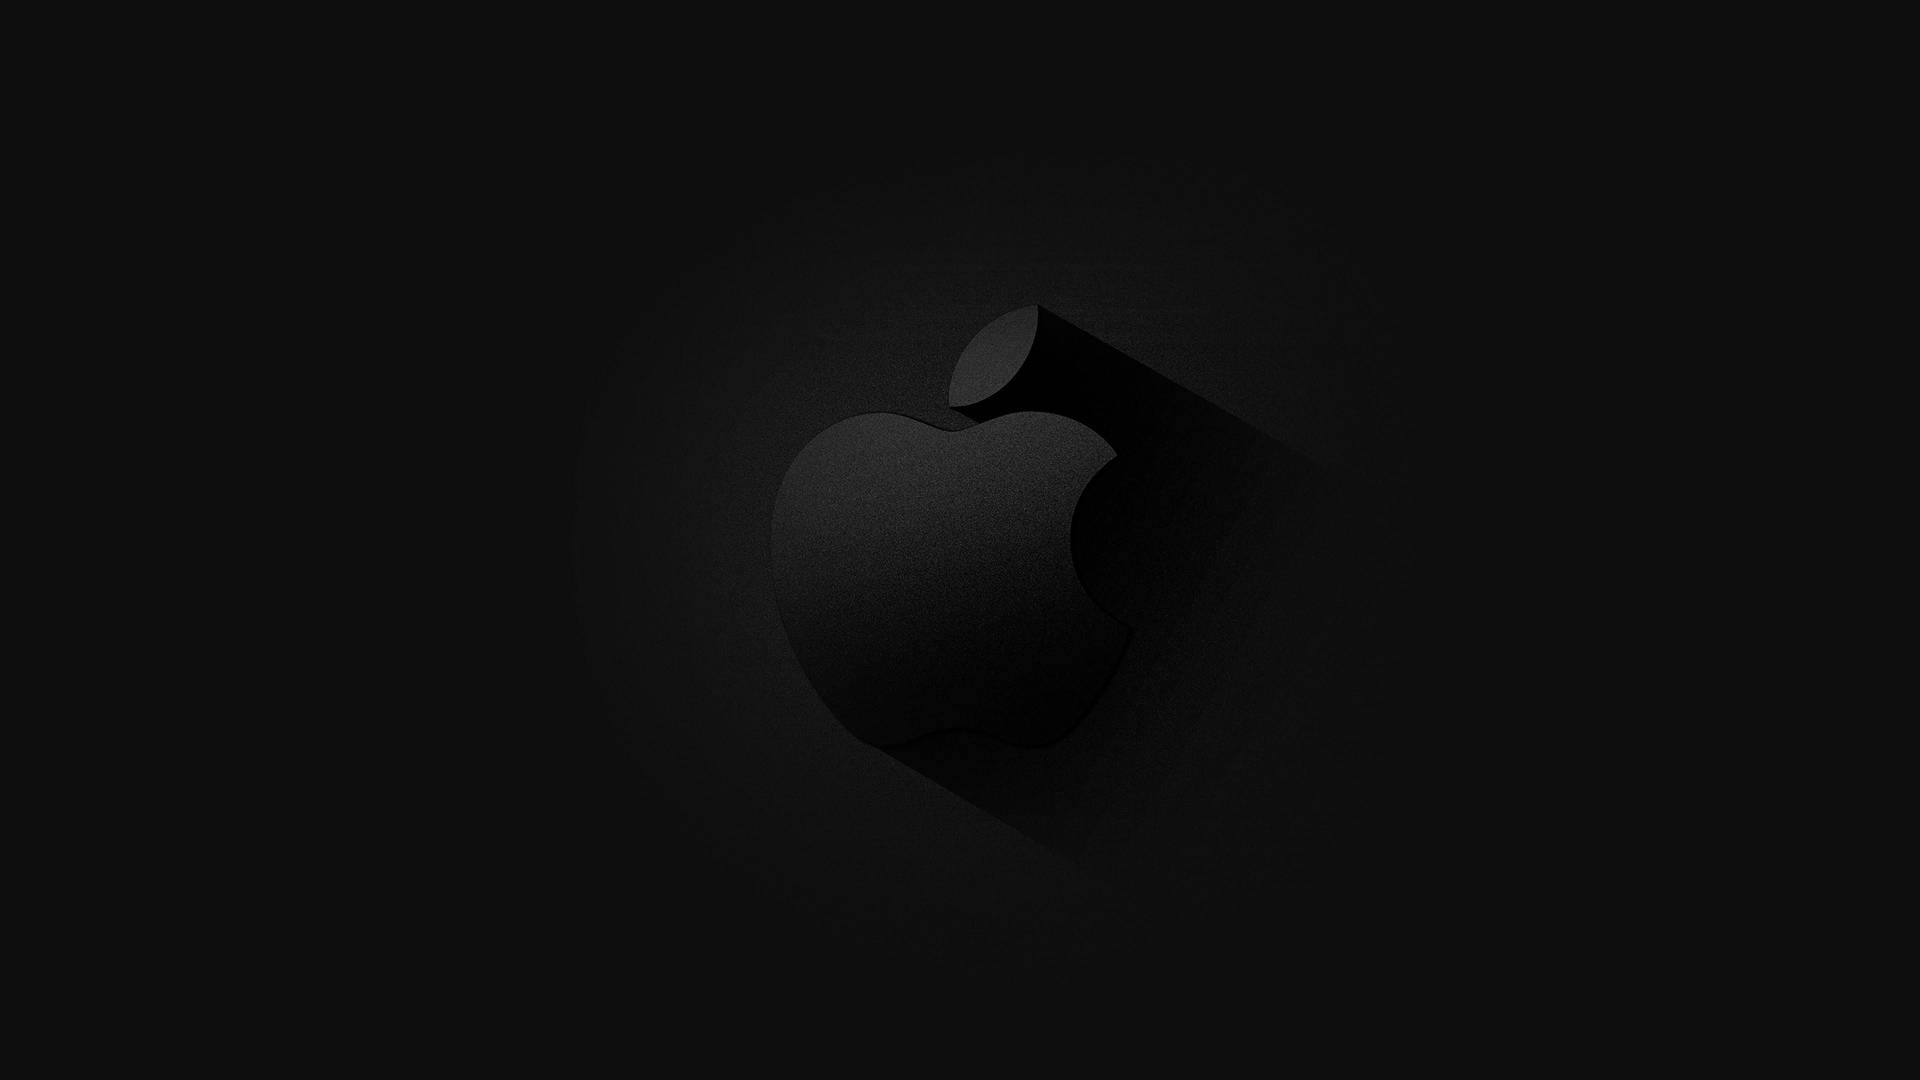 Black Apple Logo 4k Background